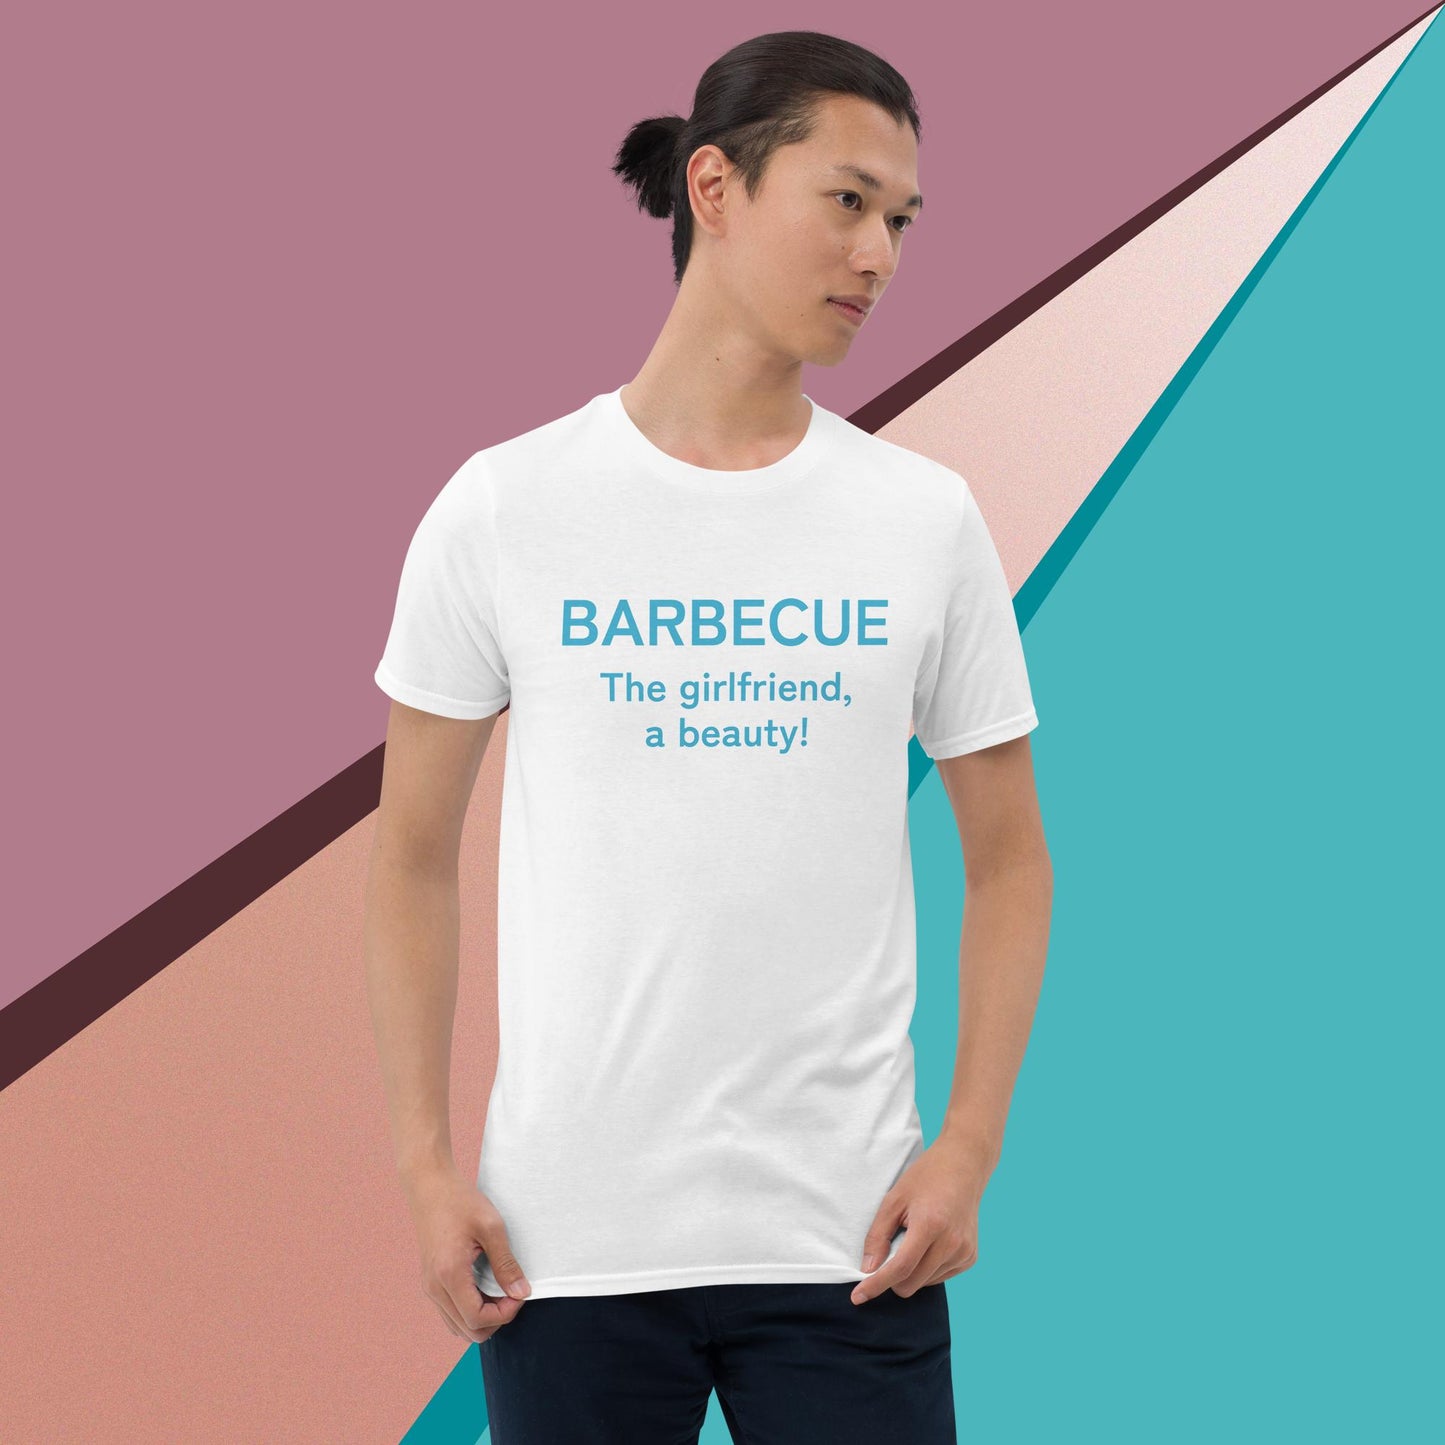 BARBECUE - The girlfriend, a beauty...a Jazz Short-Sleeve Unisex T-Shirt